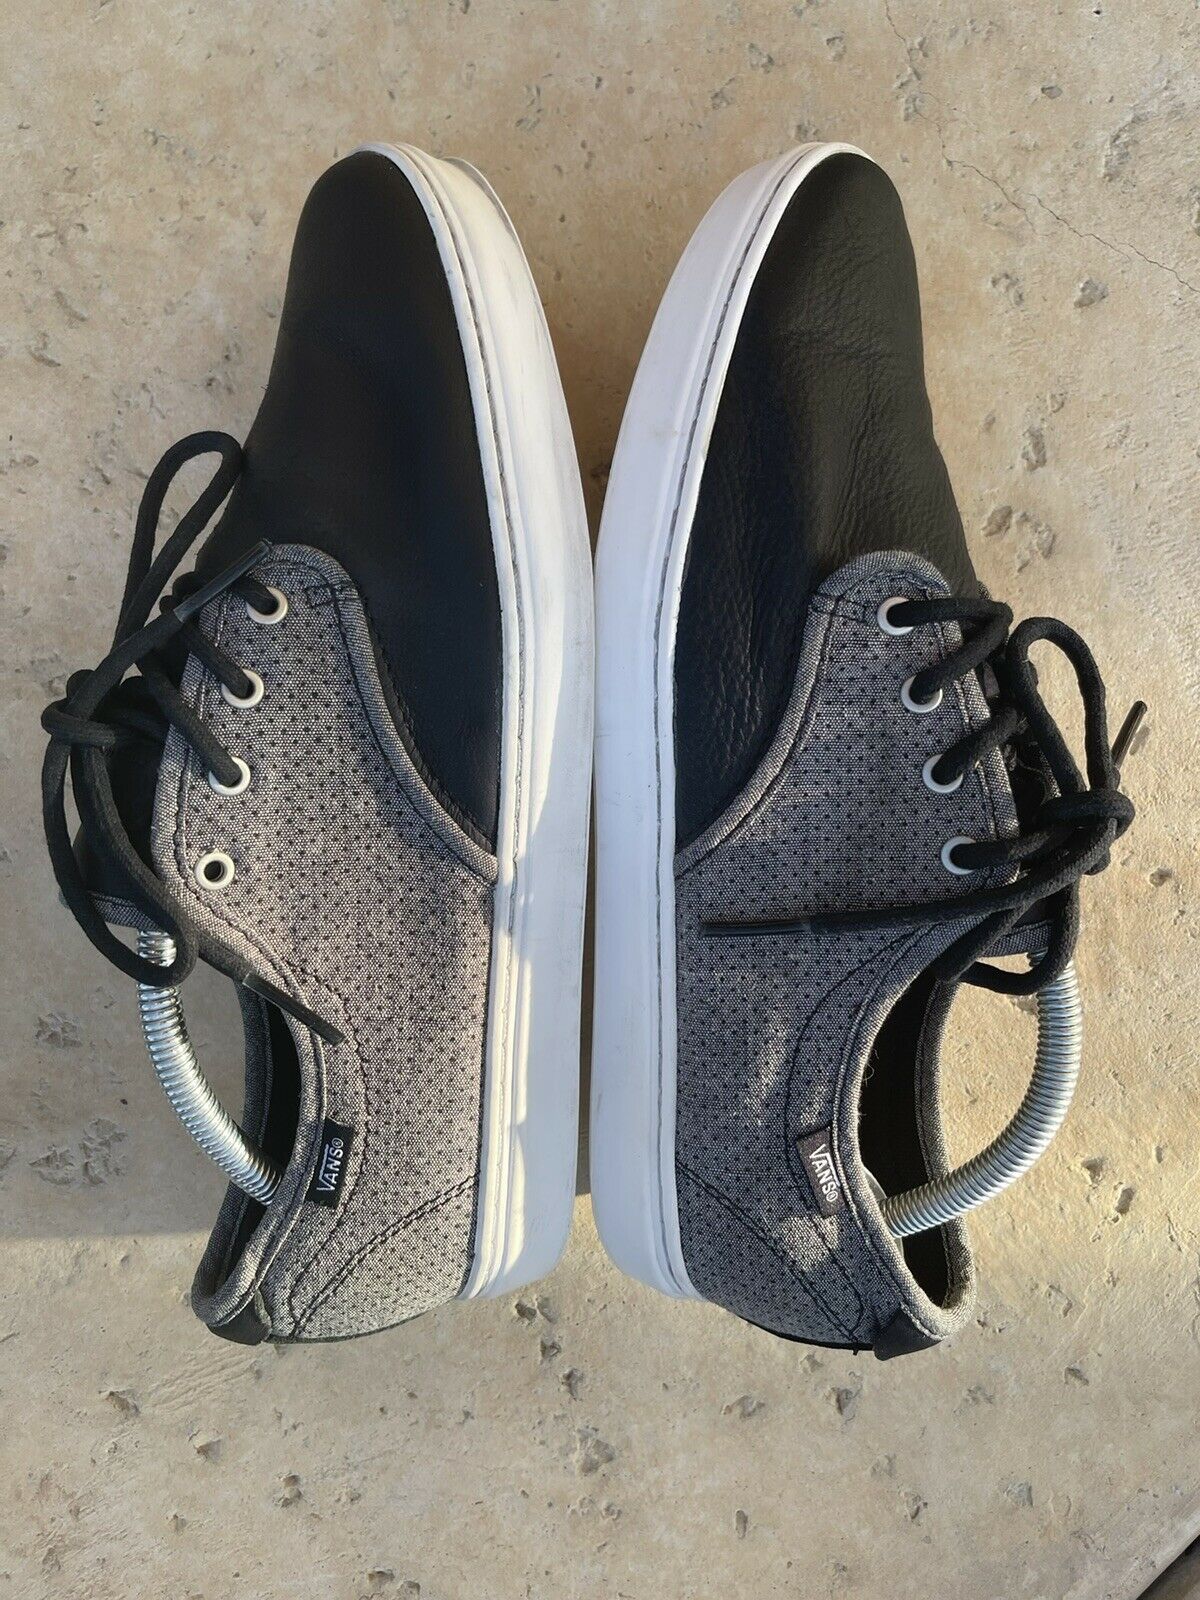 Vans OTW Black & Gray Skate Board Shoes Walking Men Sz 9.5 Hyberlife